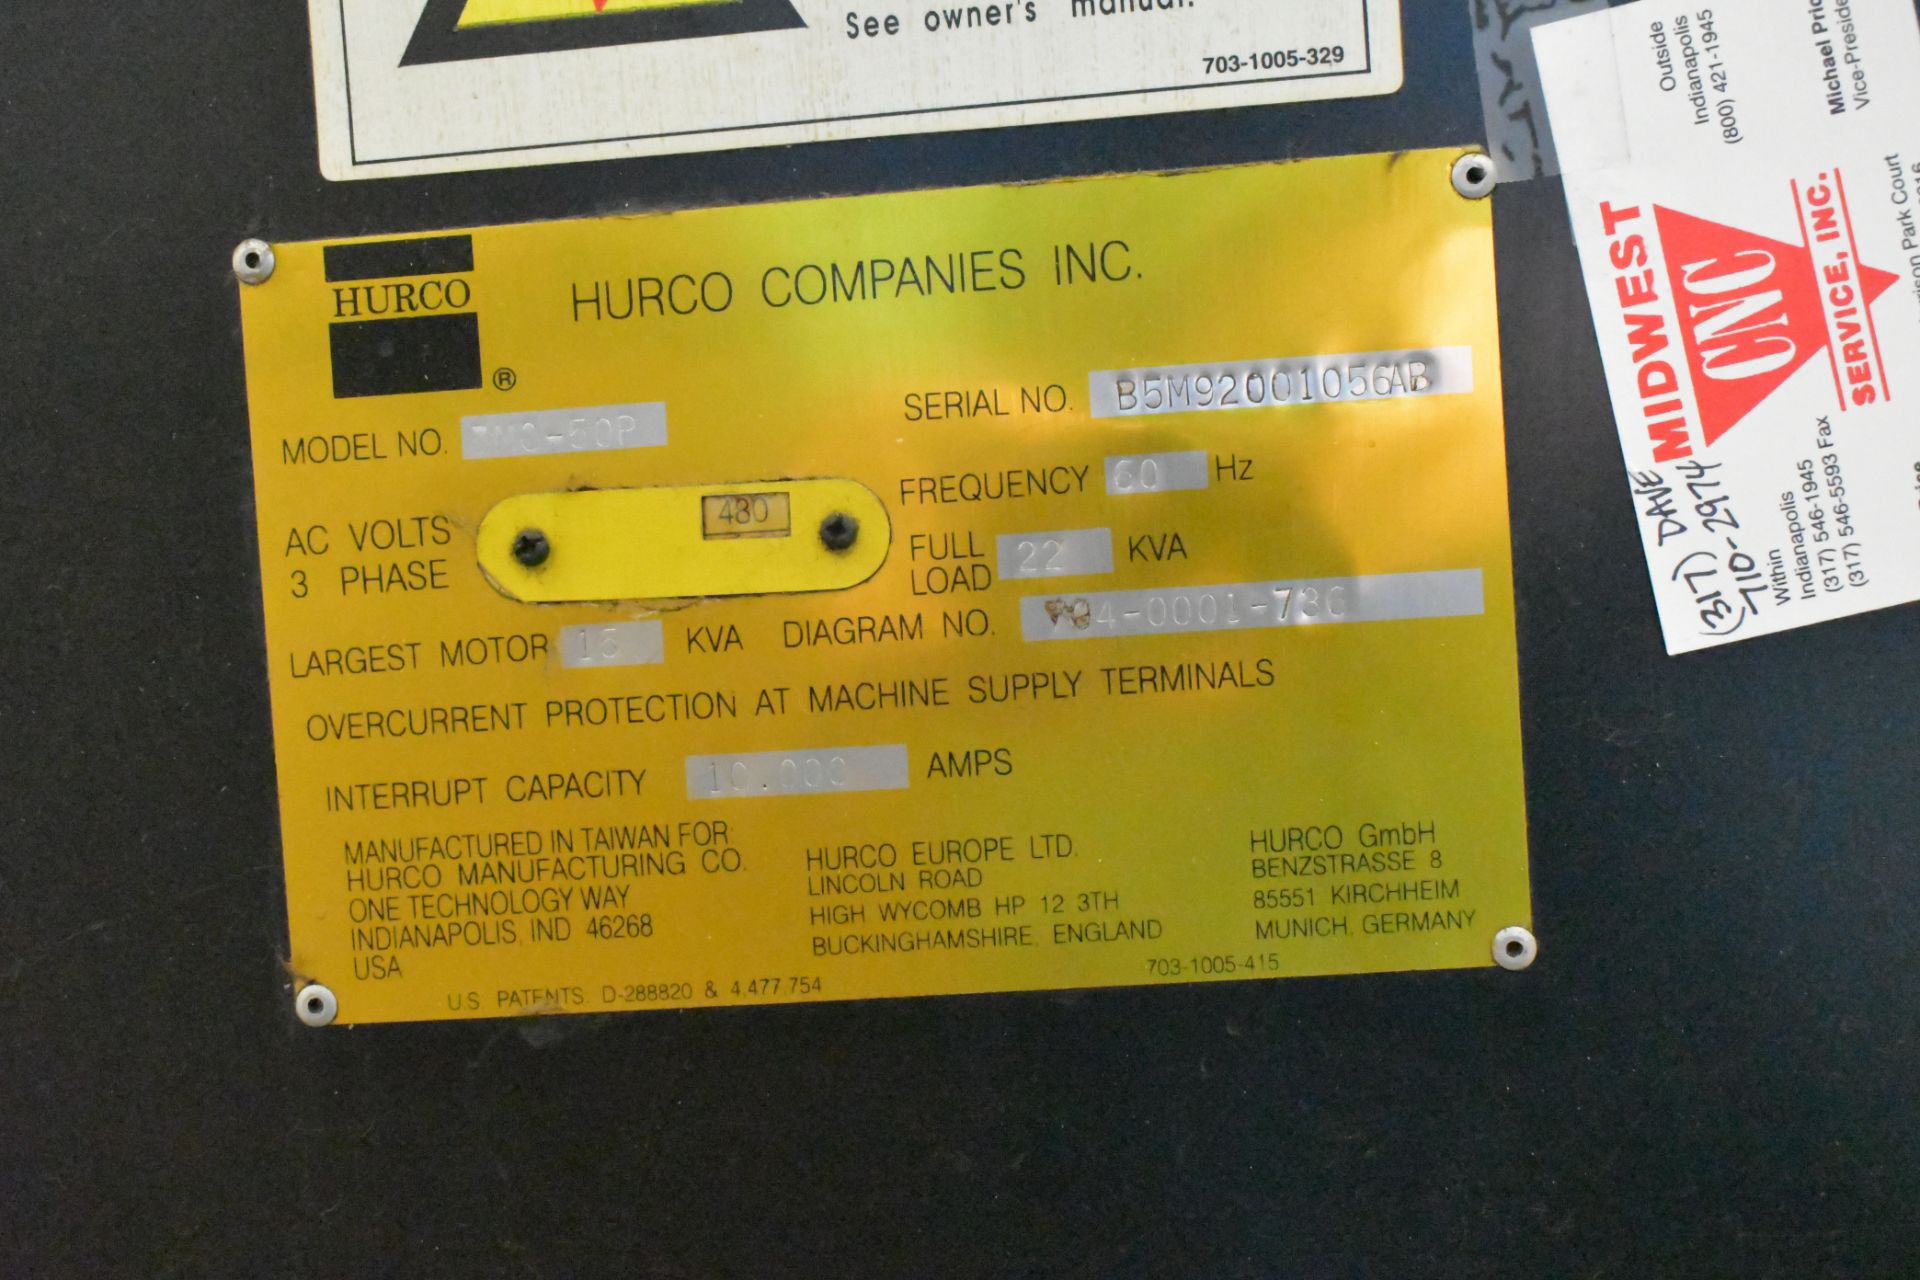 Hurco Model BMC-50P,3 Axis CNC Vertical Machining Center, S/n B5M92001056AB, Hurco Ultimax 3 CNC - Image 8 of 8